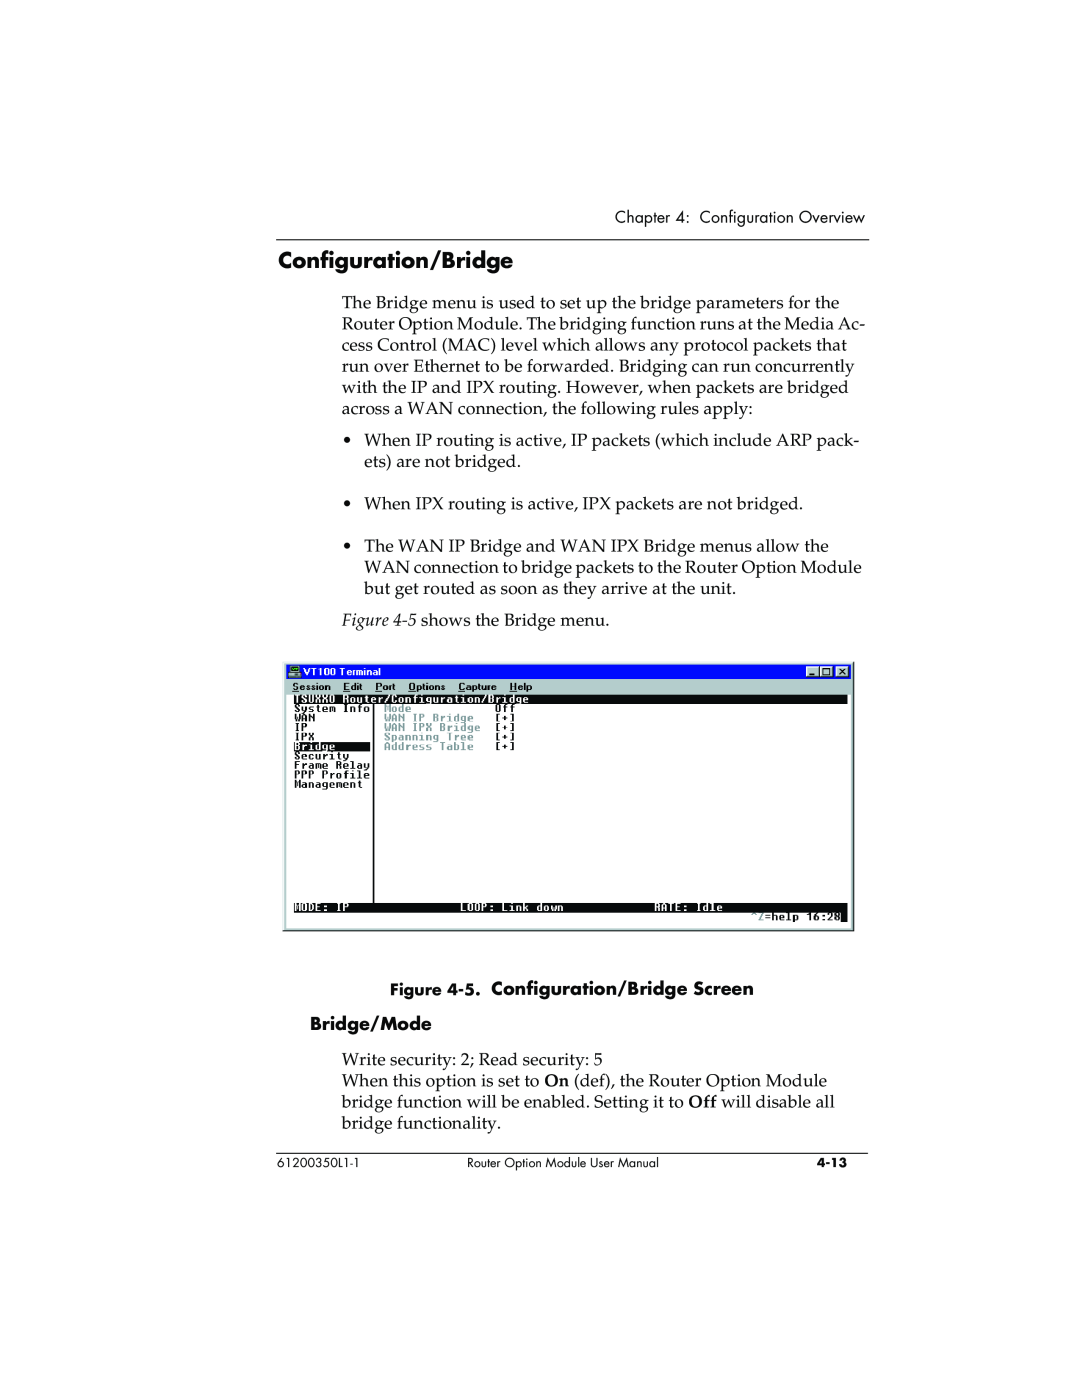 ADTRAN 1200350L1 user manual 5. Configuration/Bridge Screen Bridge/Mode 